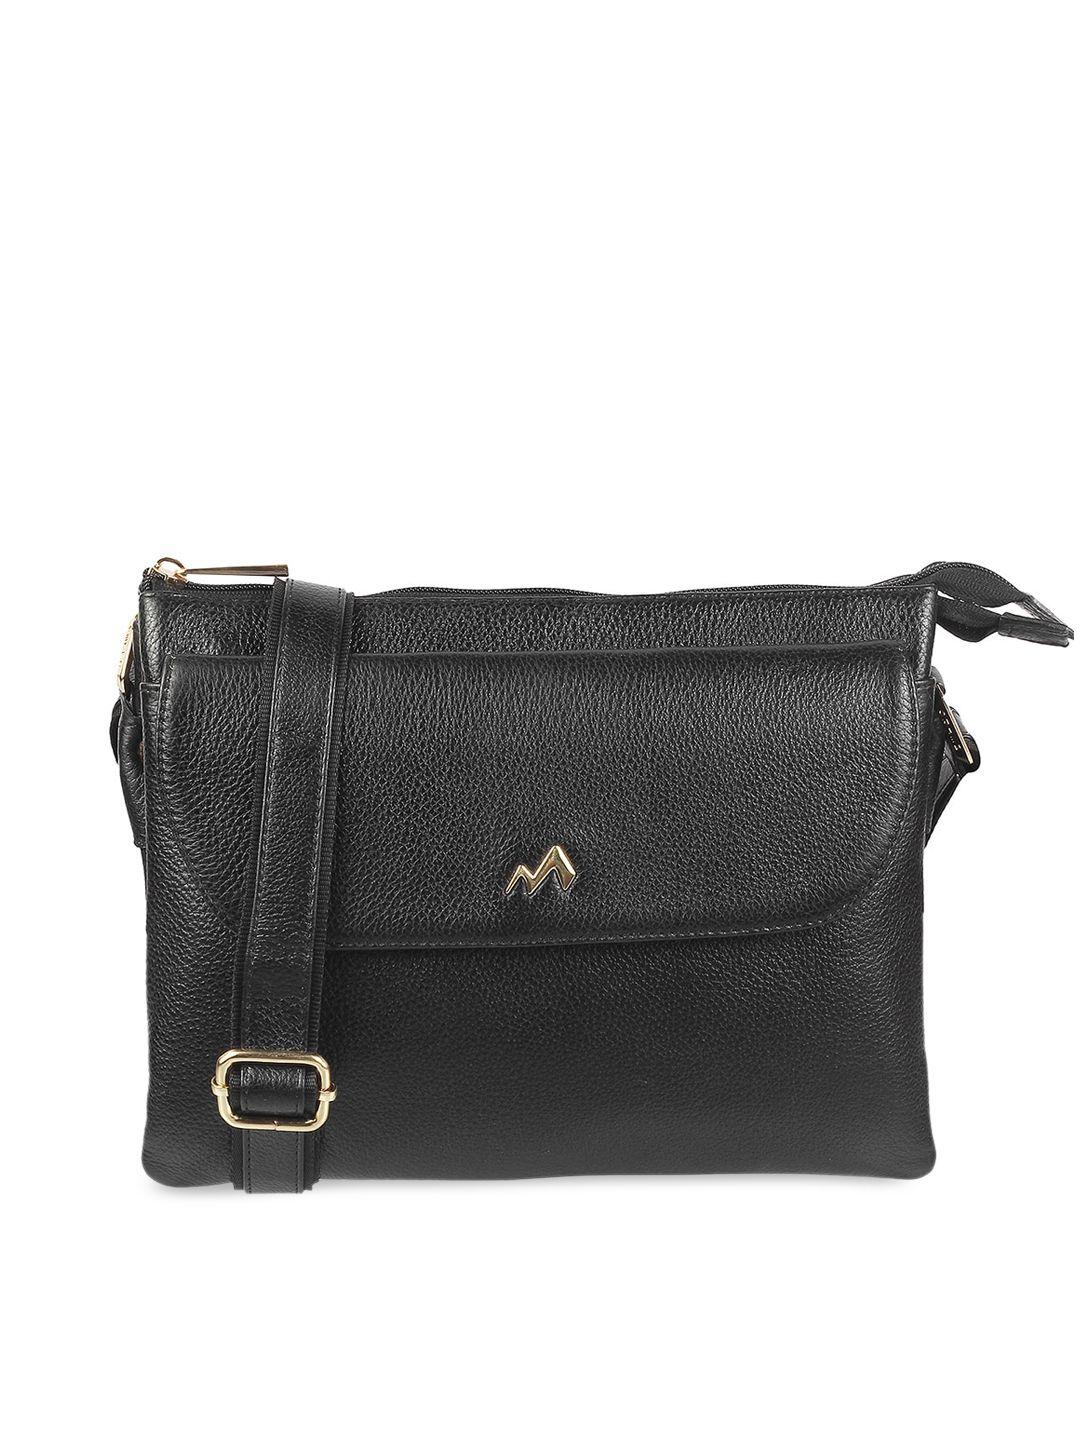 metro black leather structured sling bag